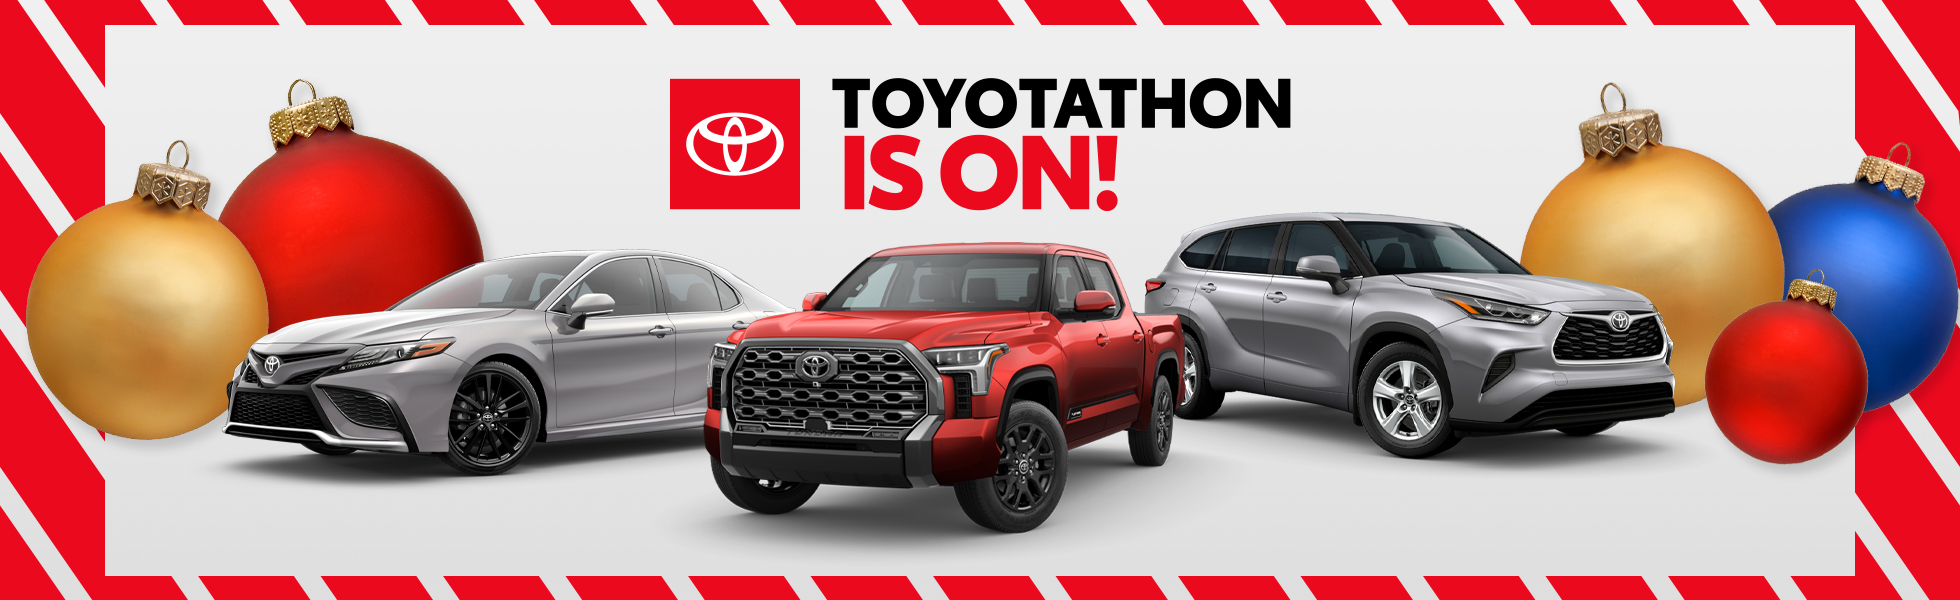 Toyotathon is on! Toyota Sales Event